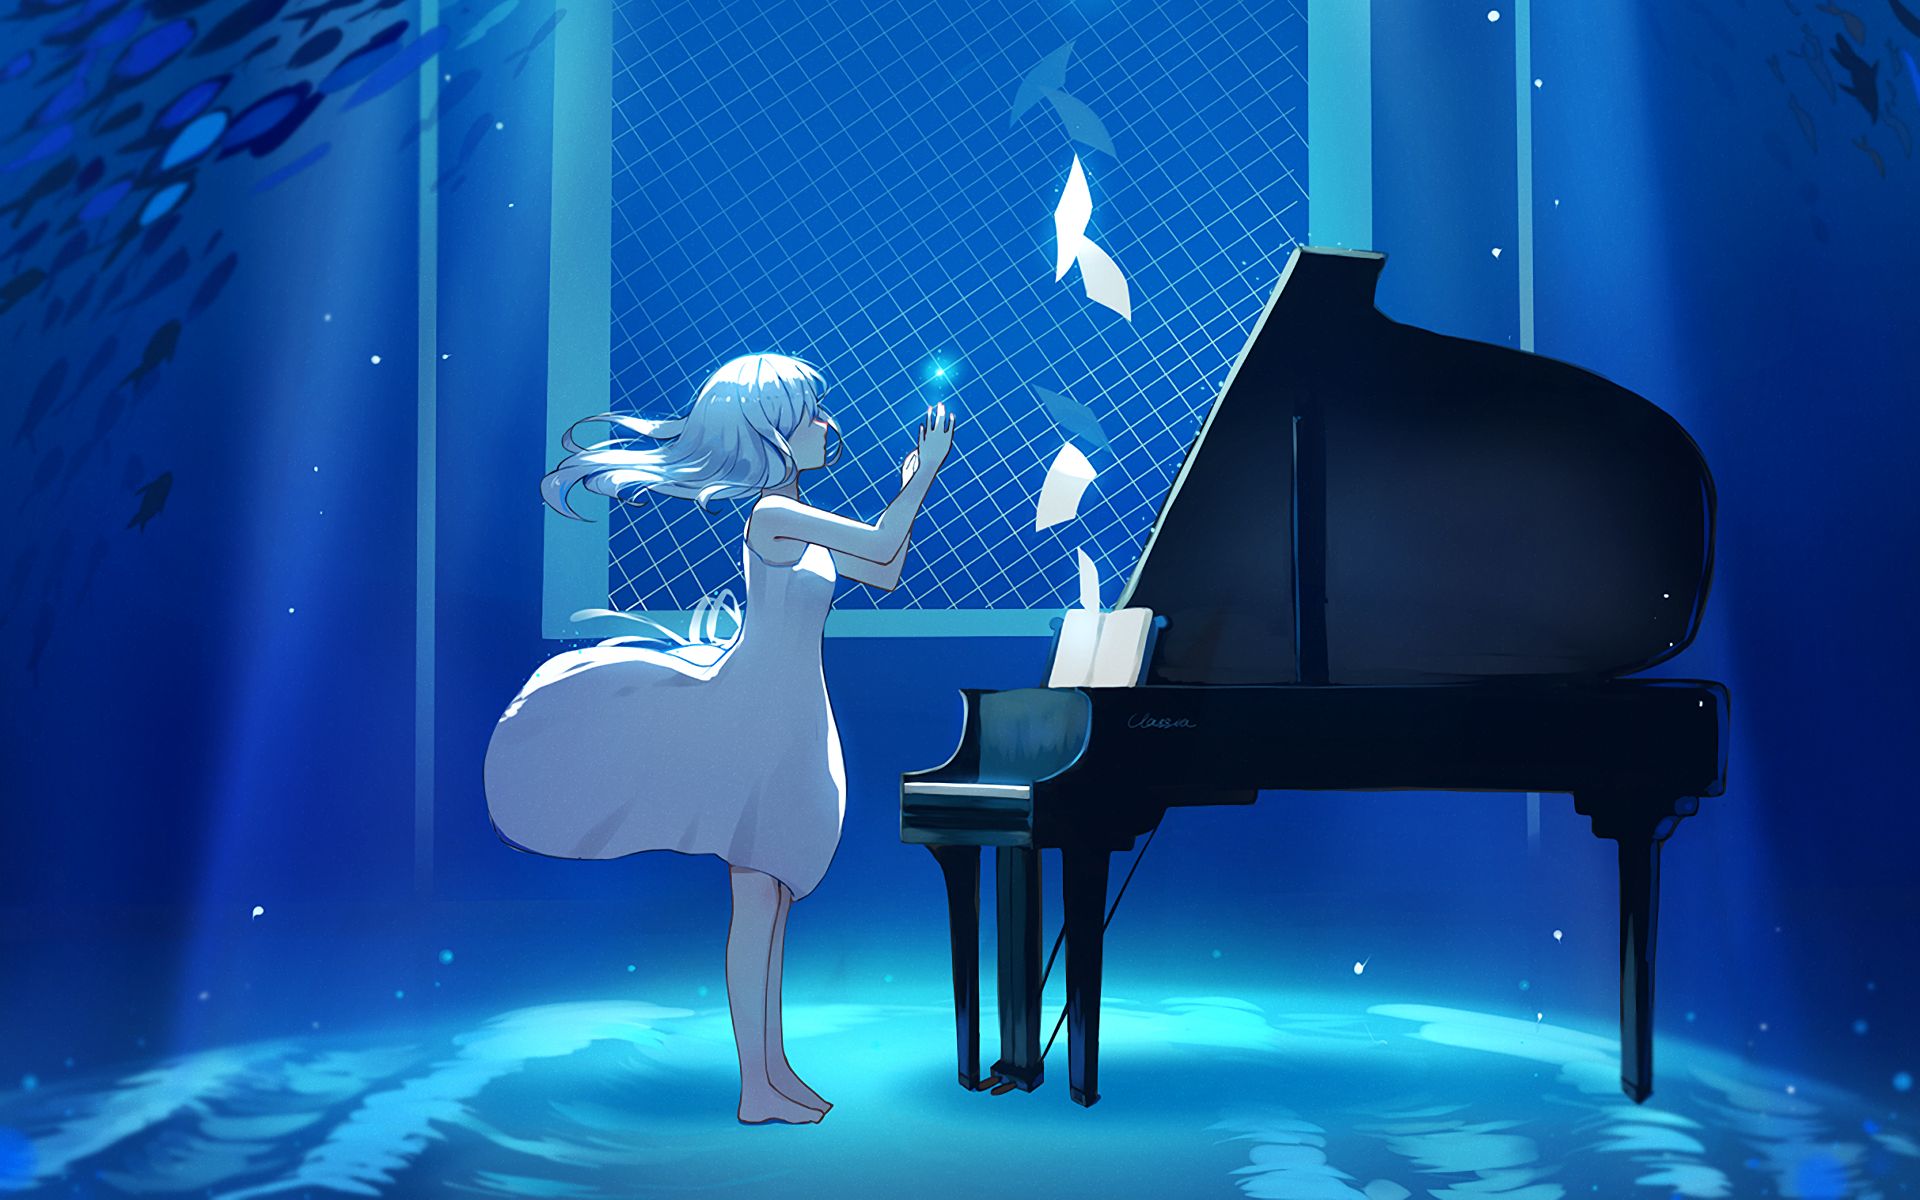 anime music piano